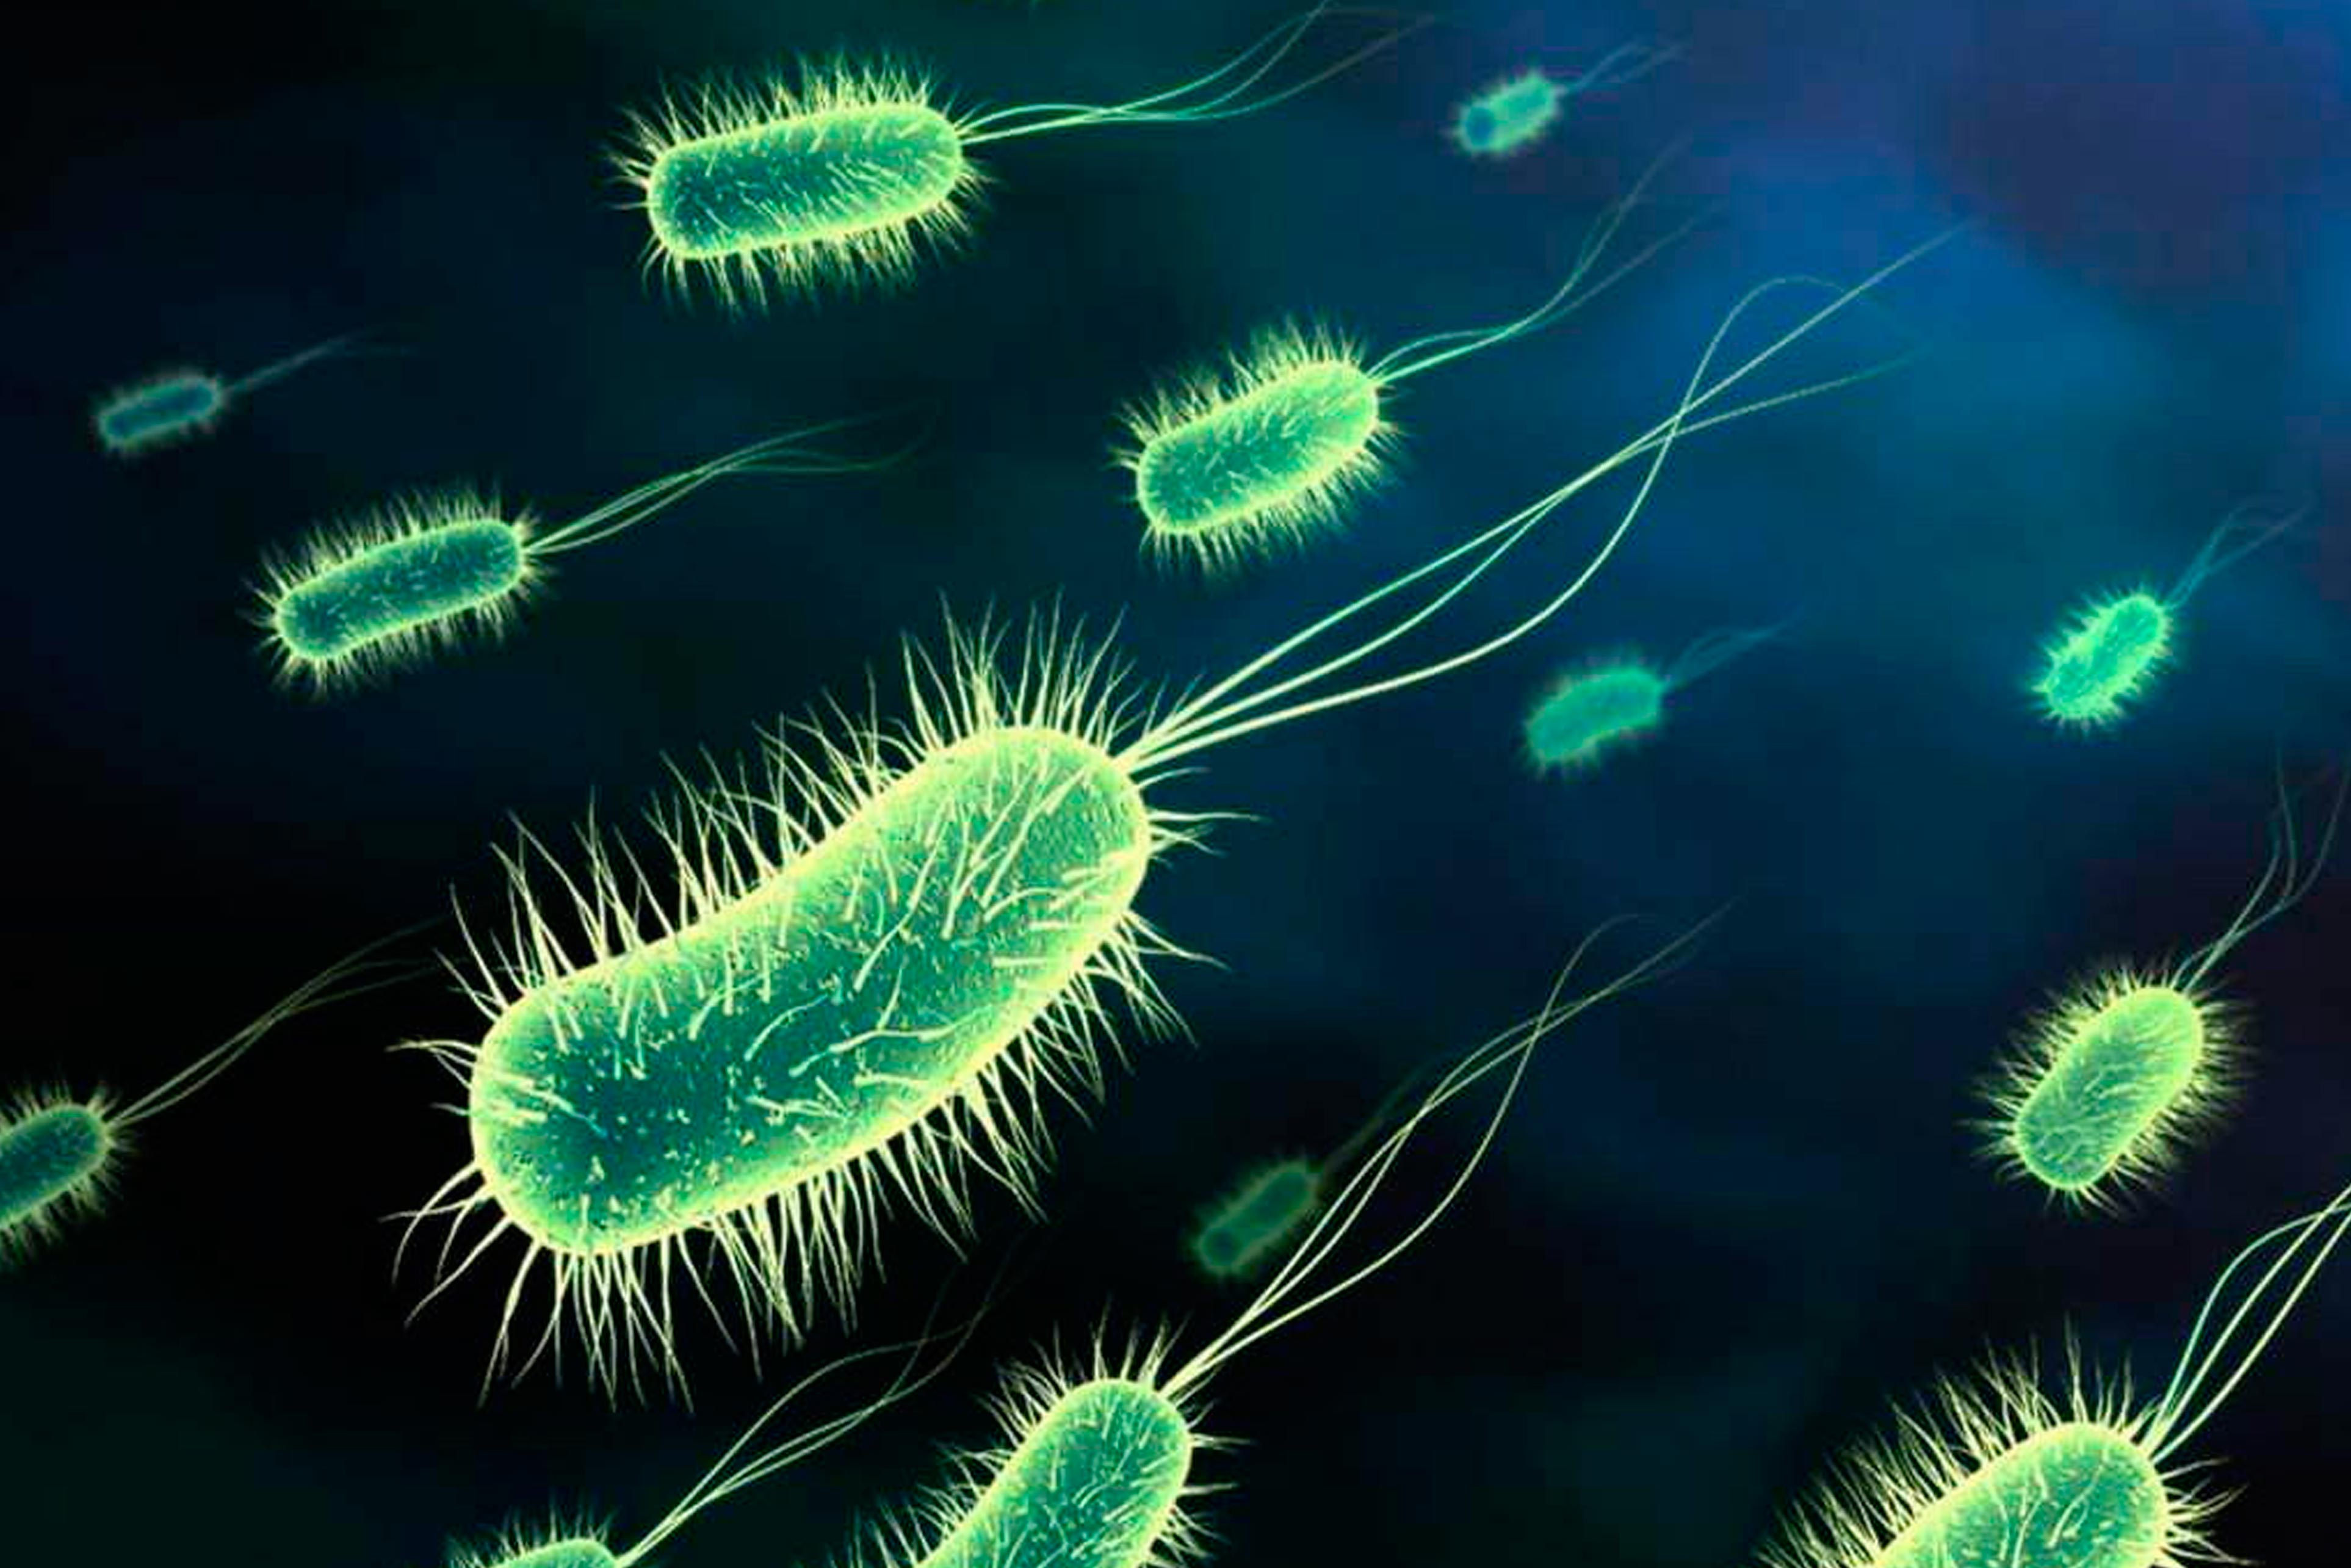 Escherichia coli in the Americas